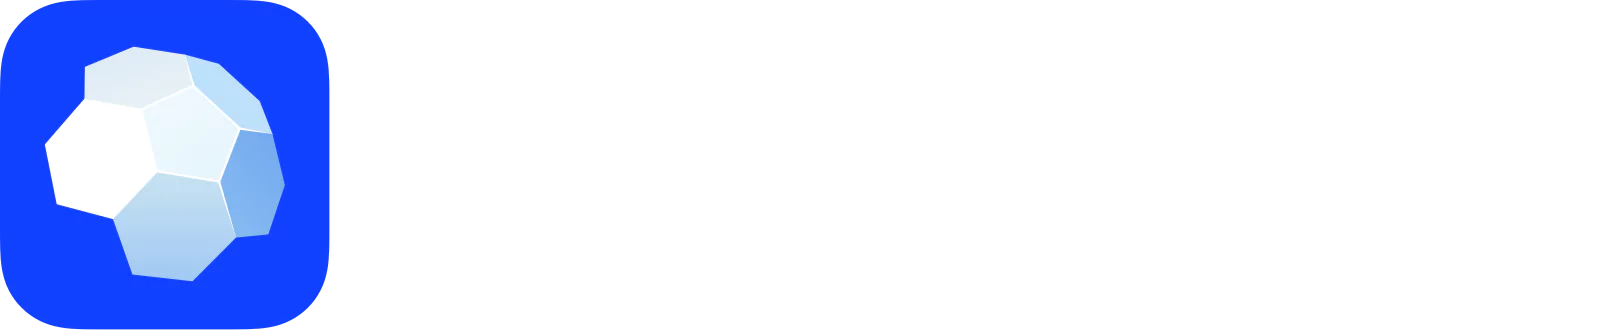 Betmaster logo.